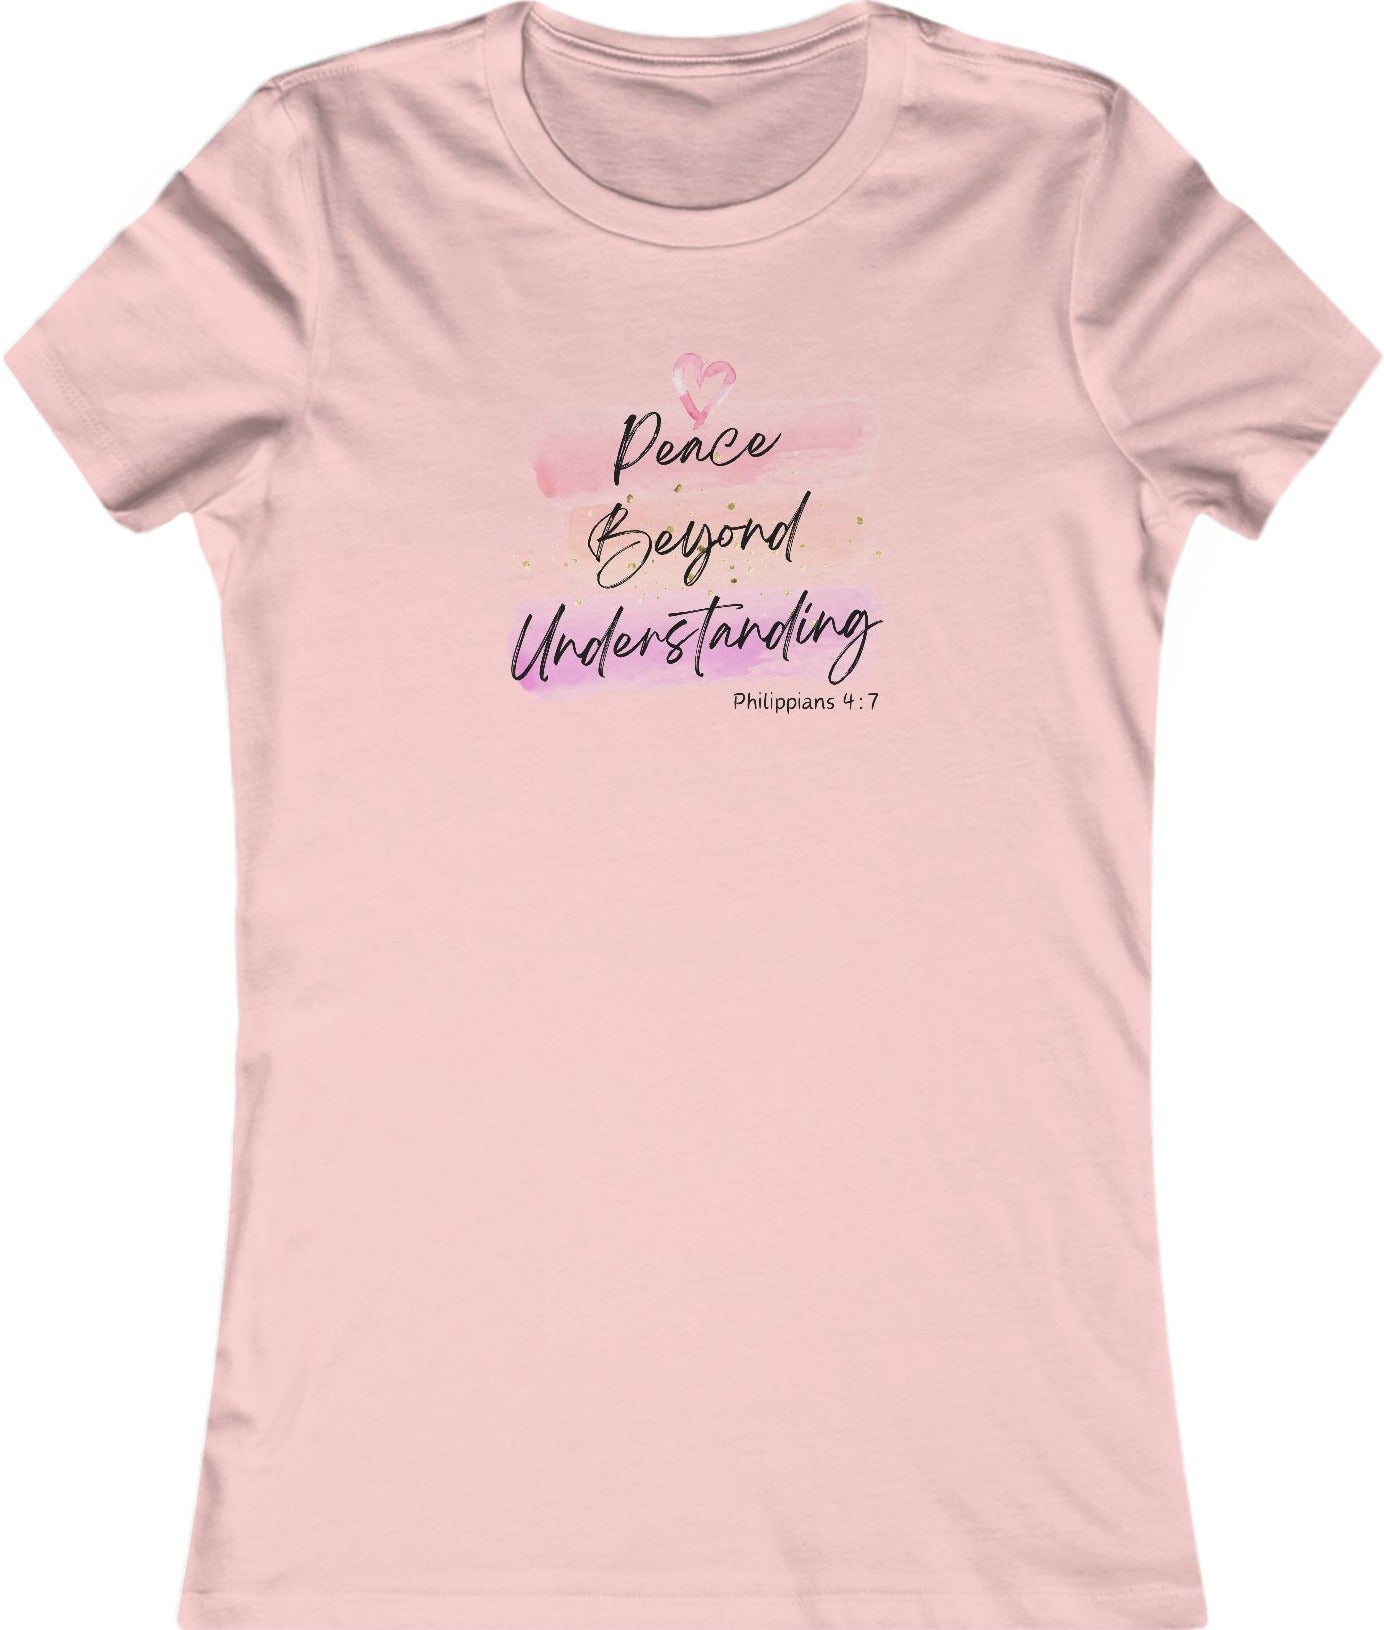 Philippians 4:7, Christian T-shirt for Women pink